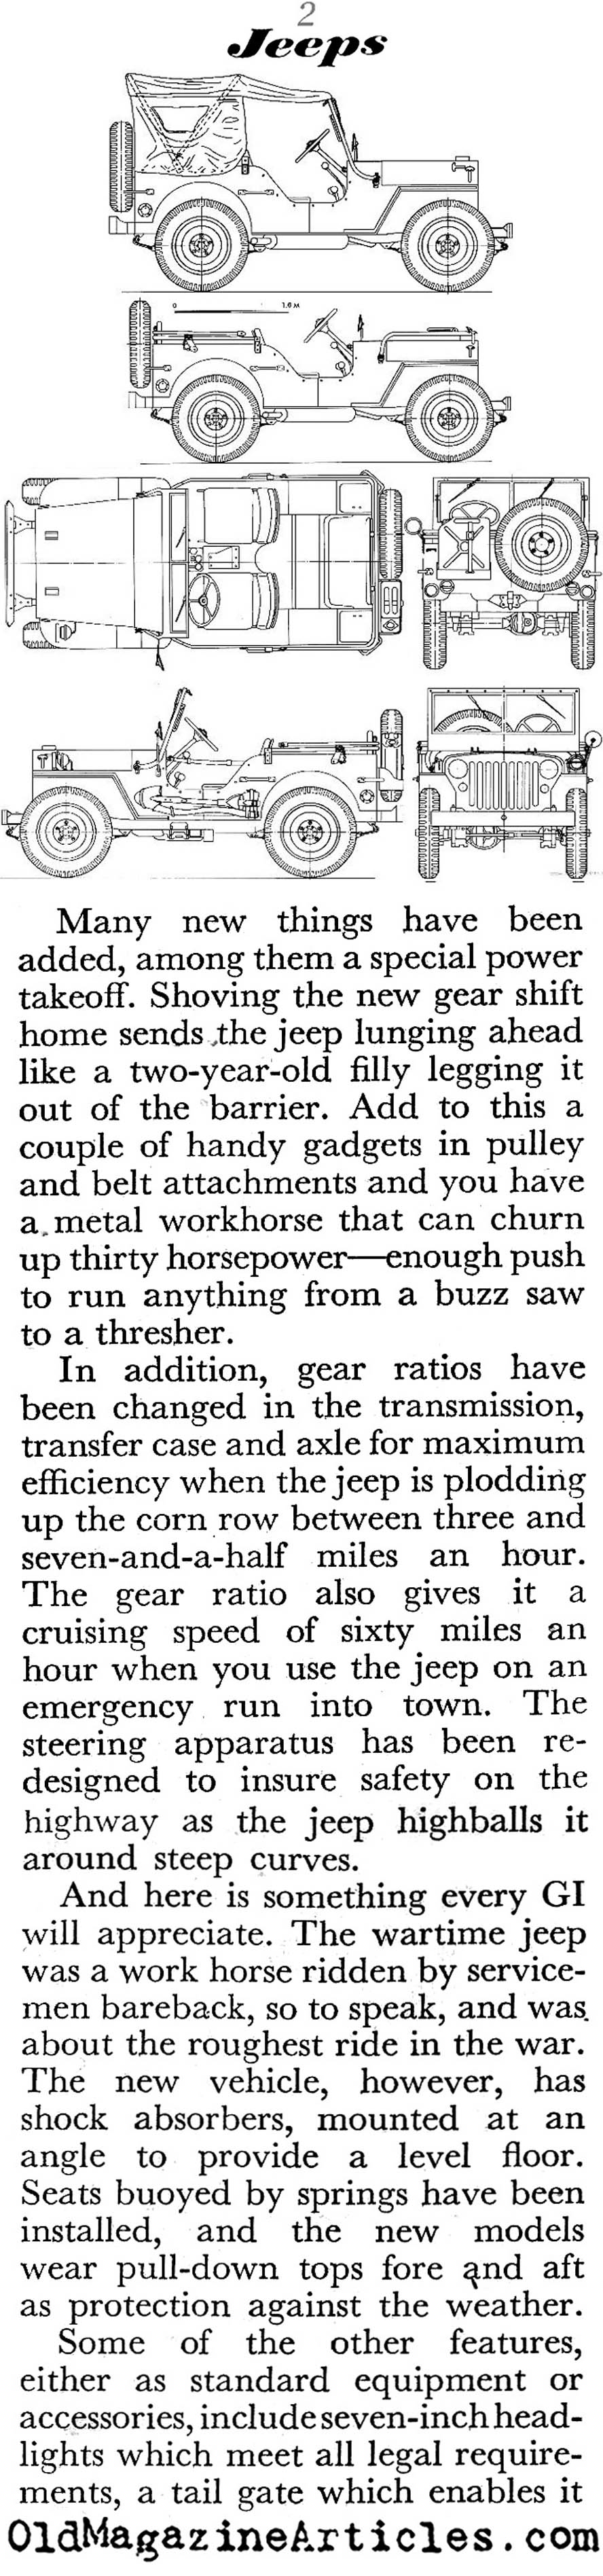 The Jeep (Coronet & Yank Magazines, 1945)